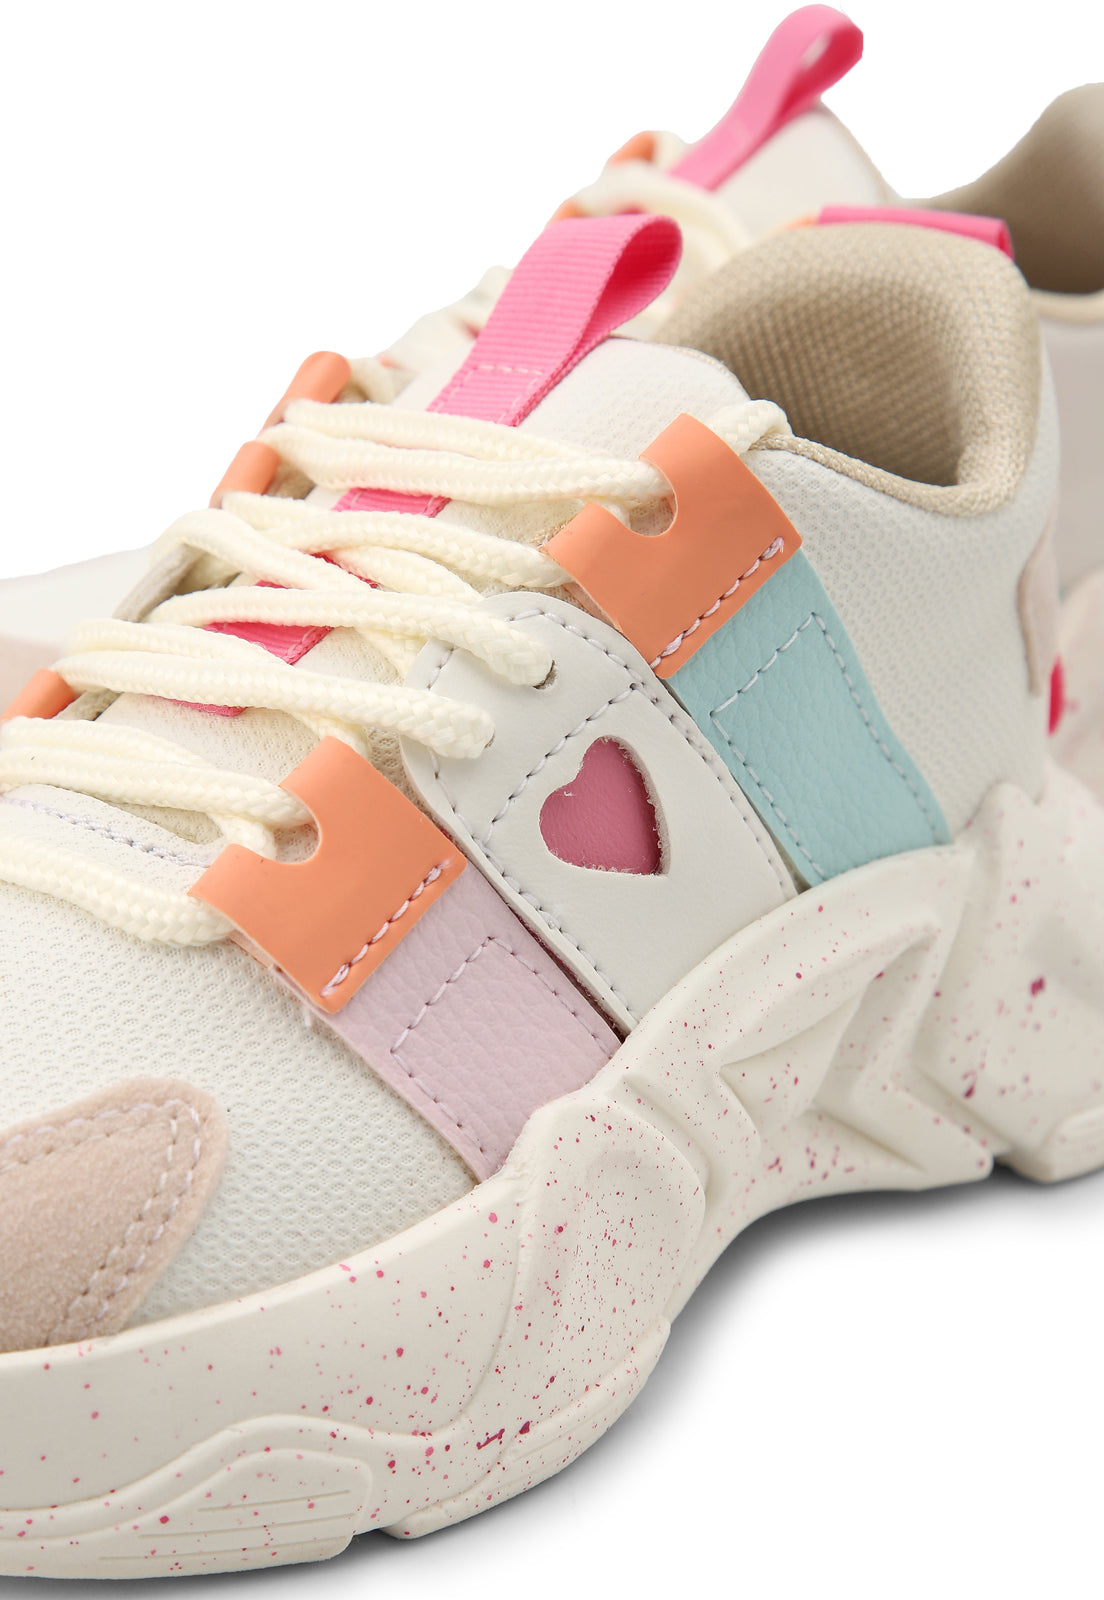 Tenis  Infantil Sneakers Rosa  940 Tellenzi